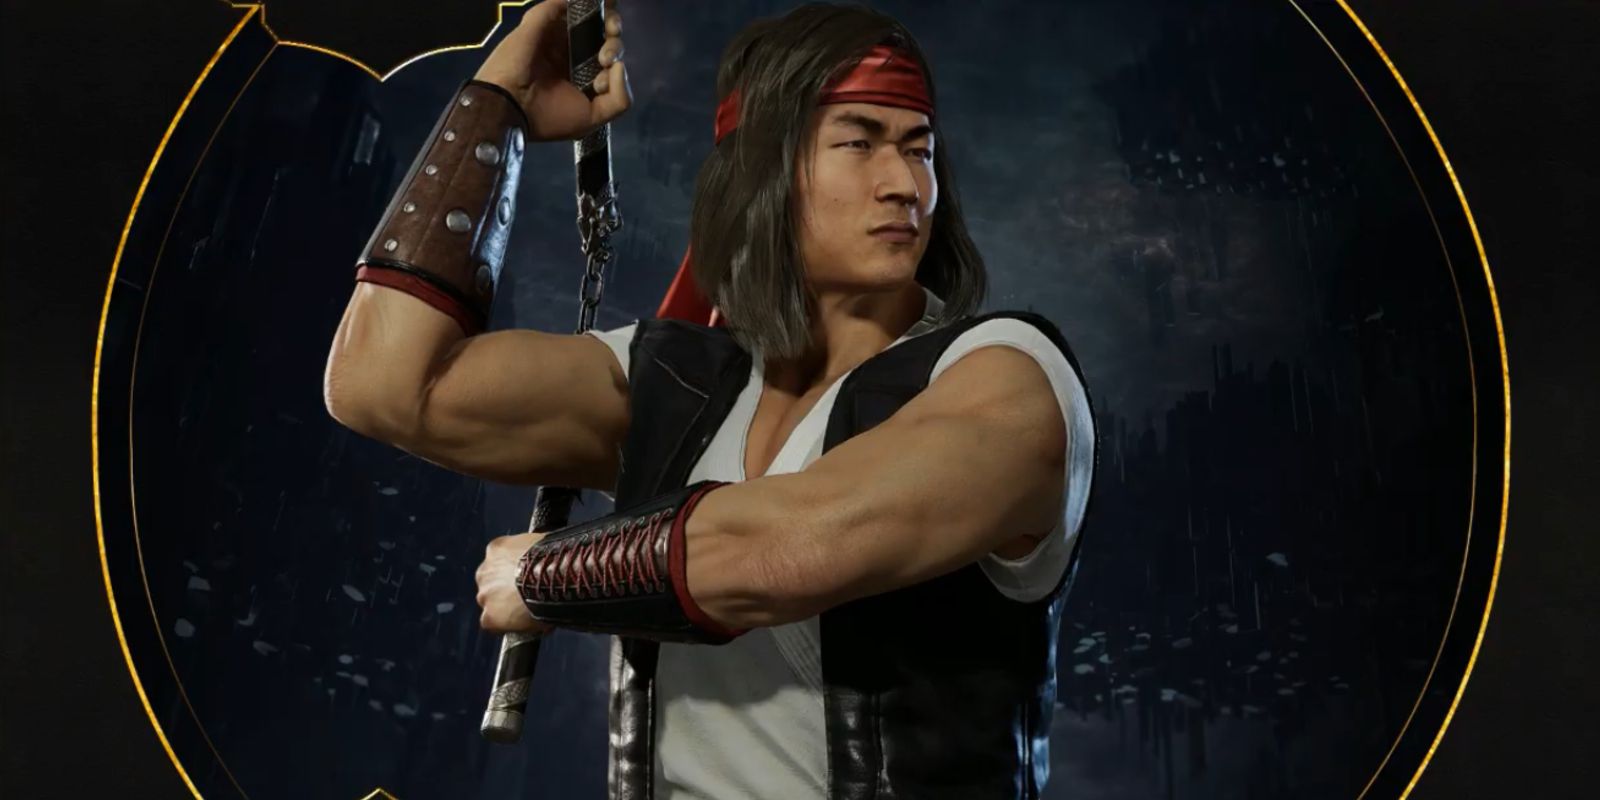 Liu Kang wielding his nunchaku in Mortal Kombat 11